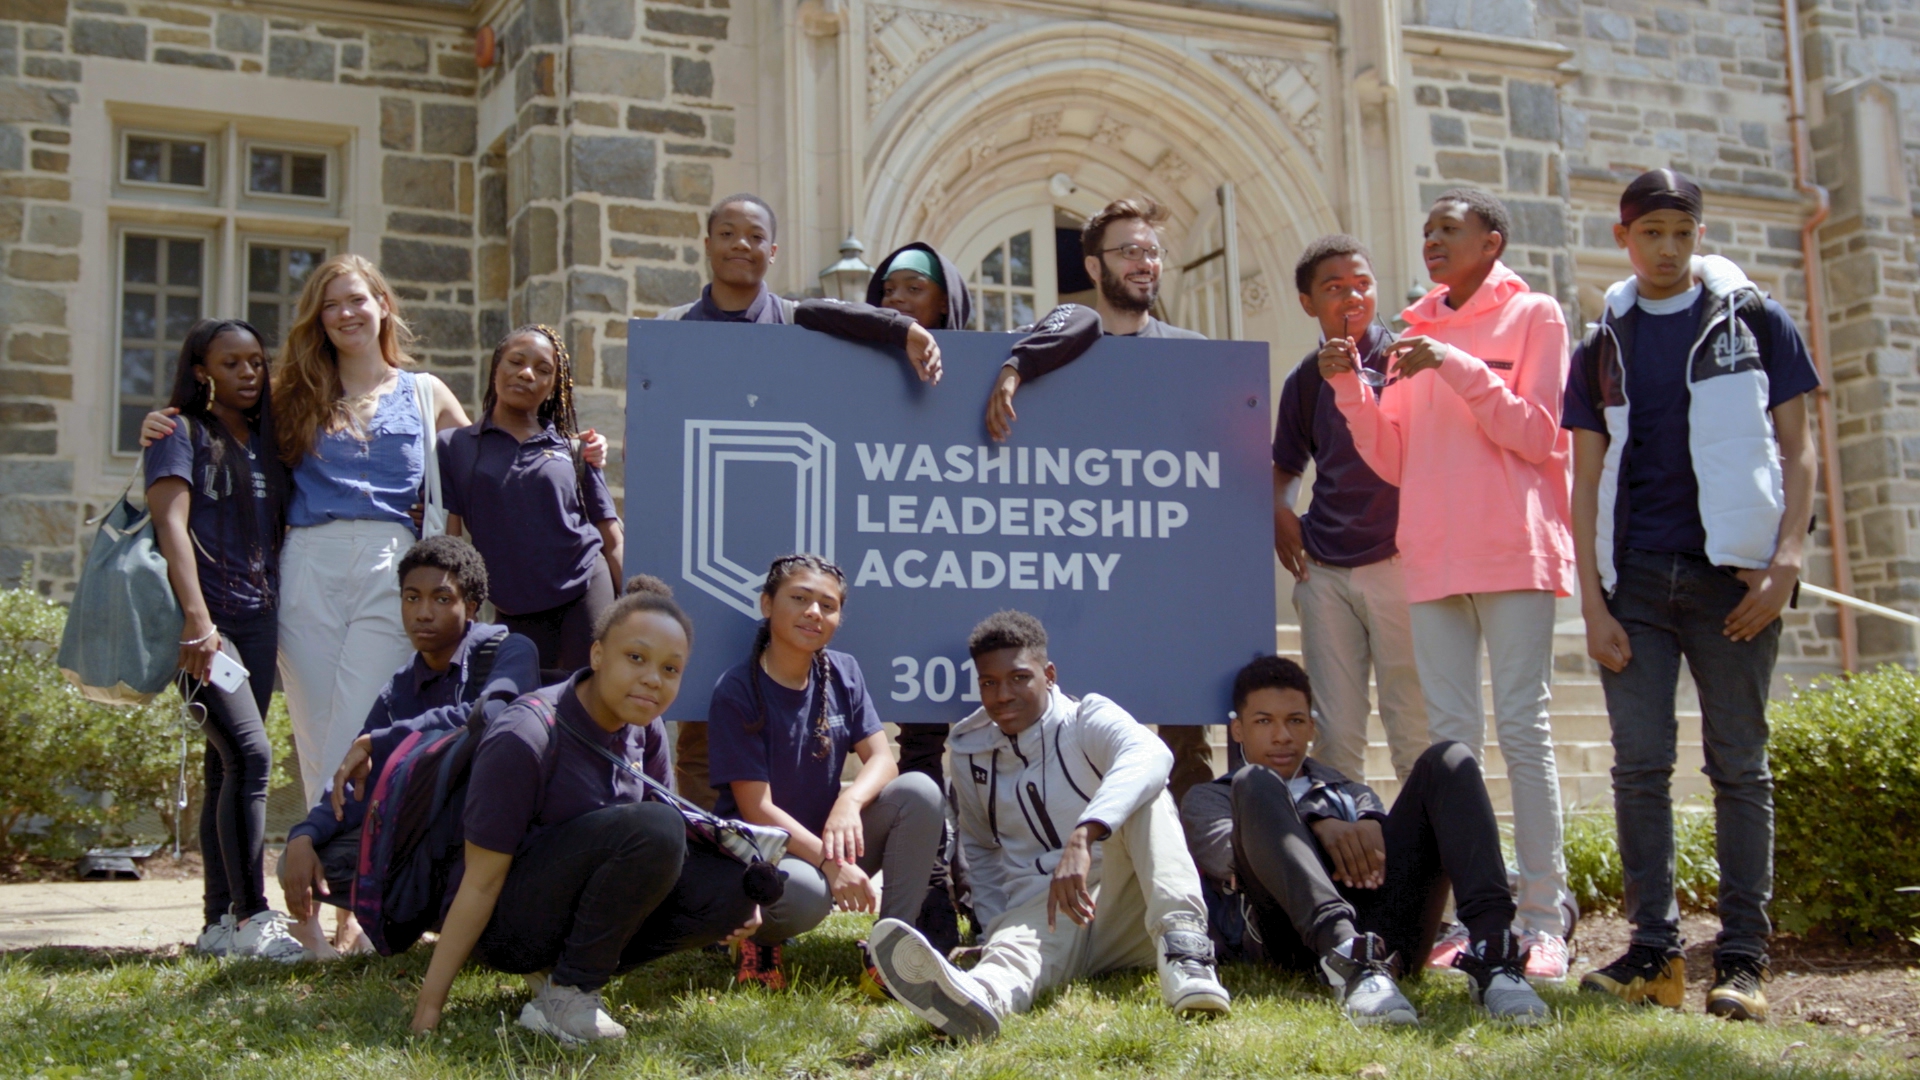 Washington Leadership Academy